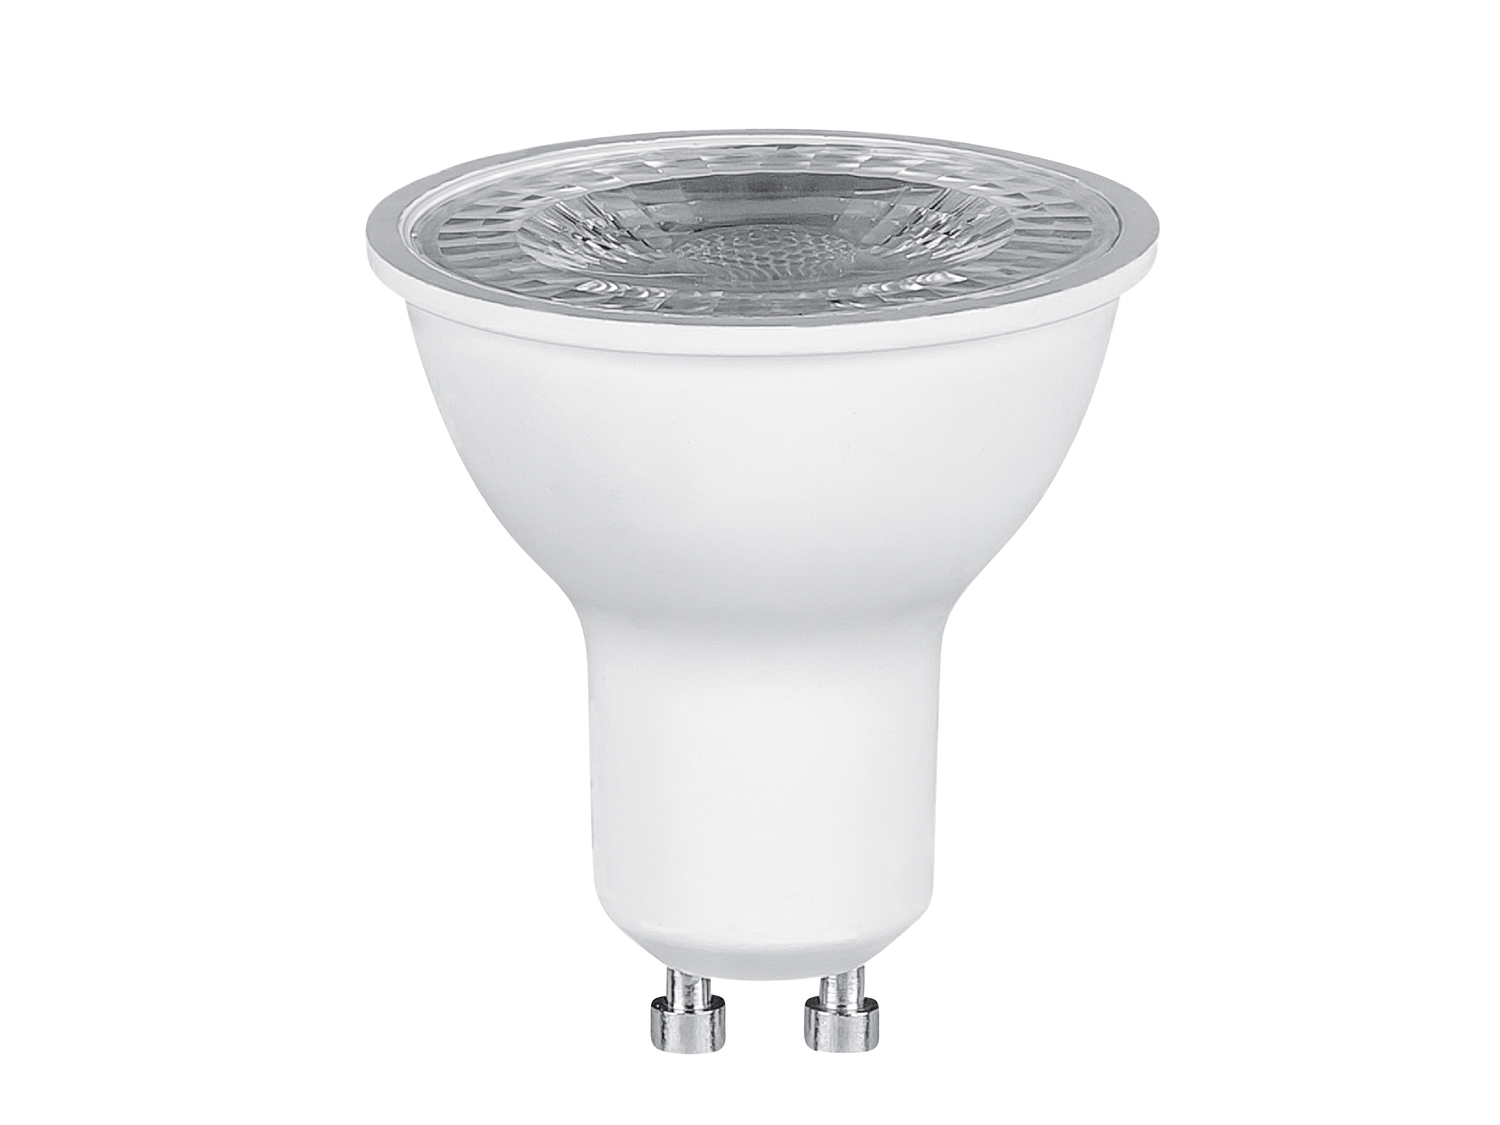 Lampadina LED Philips, prezzo 6.99 &#8364; 
3 pezzi 
E27
- 9W
- bianco caldo
- ...